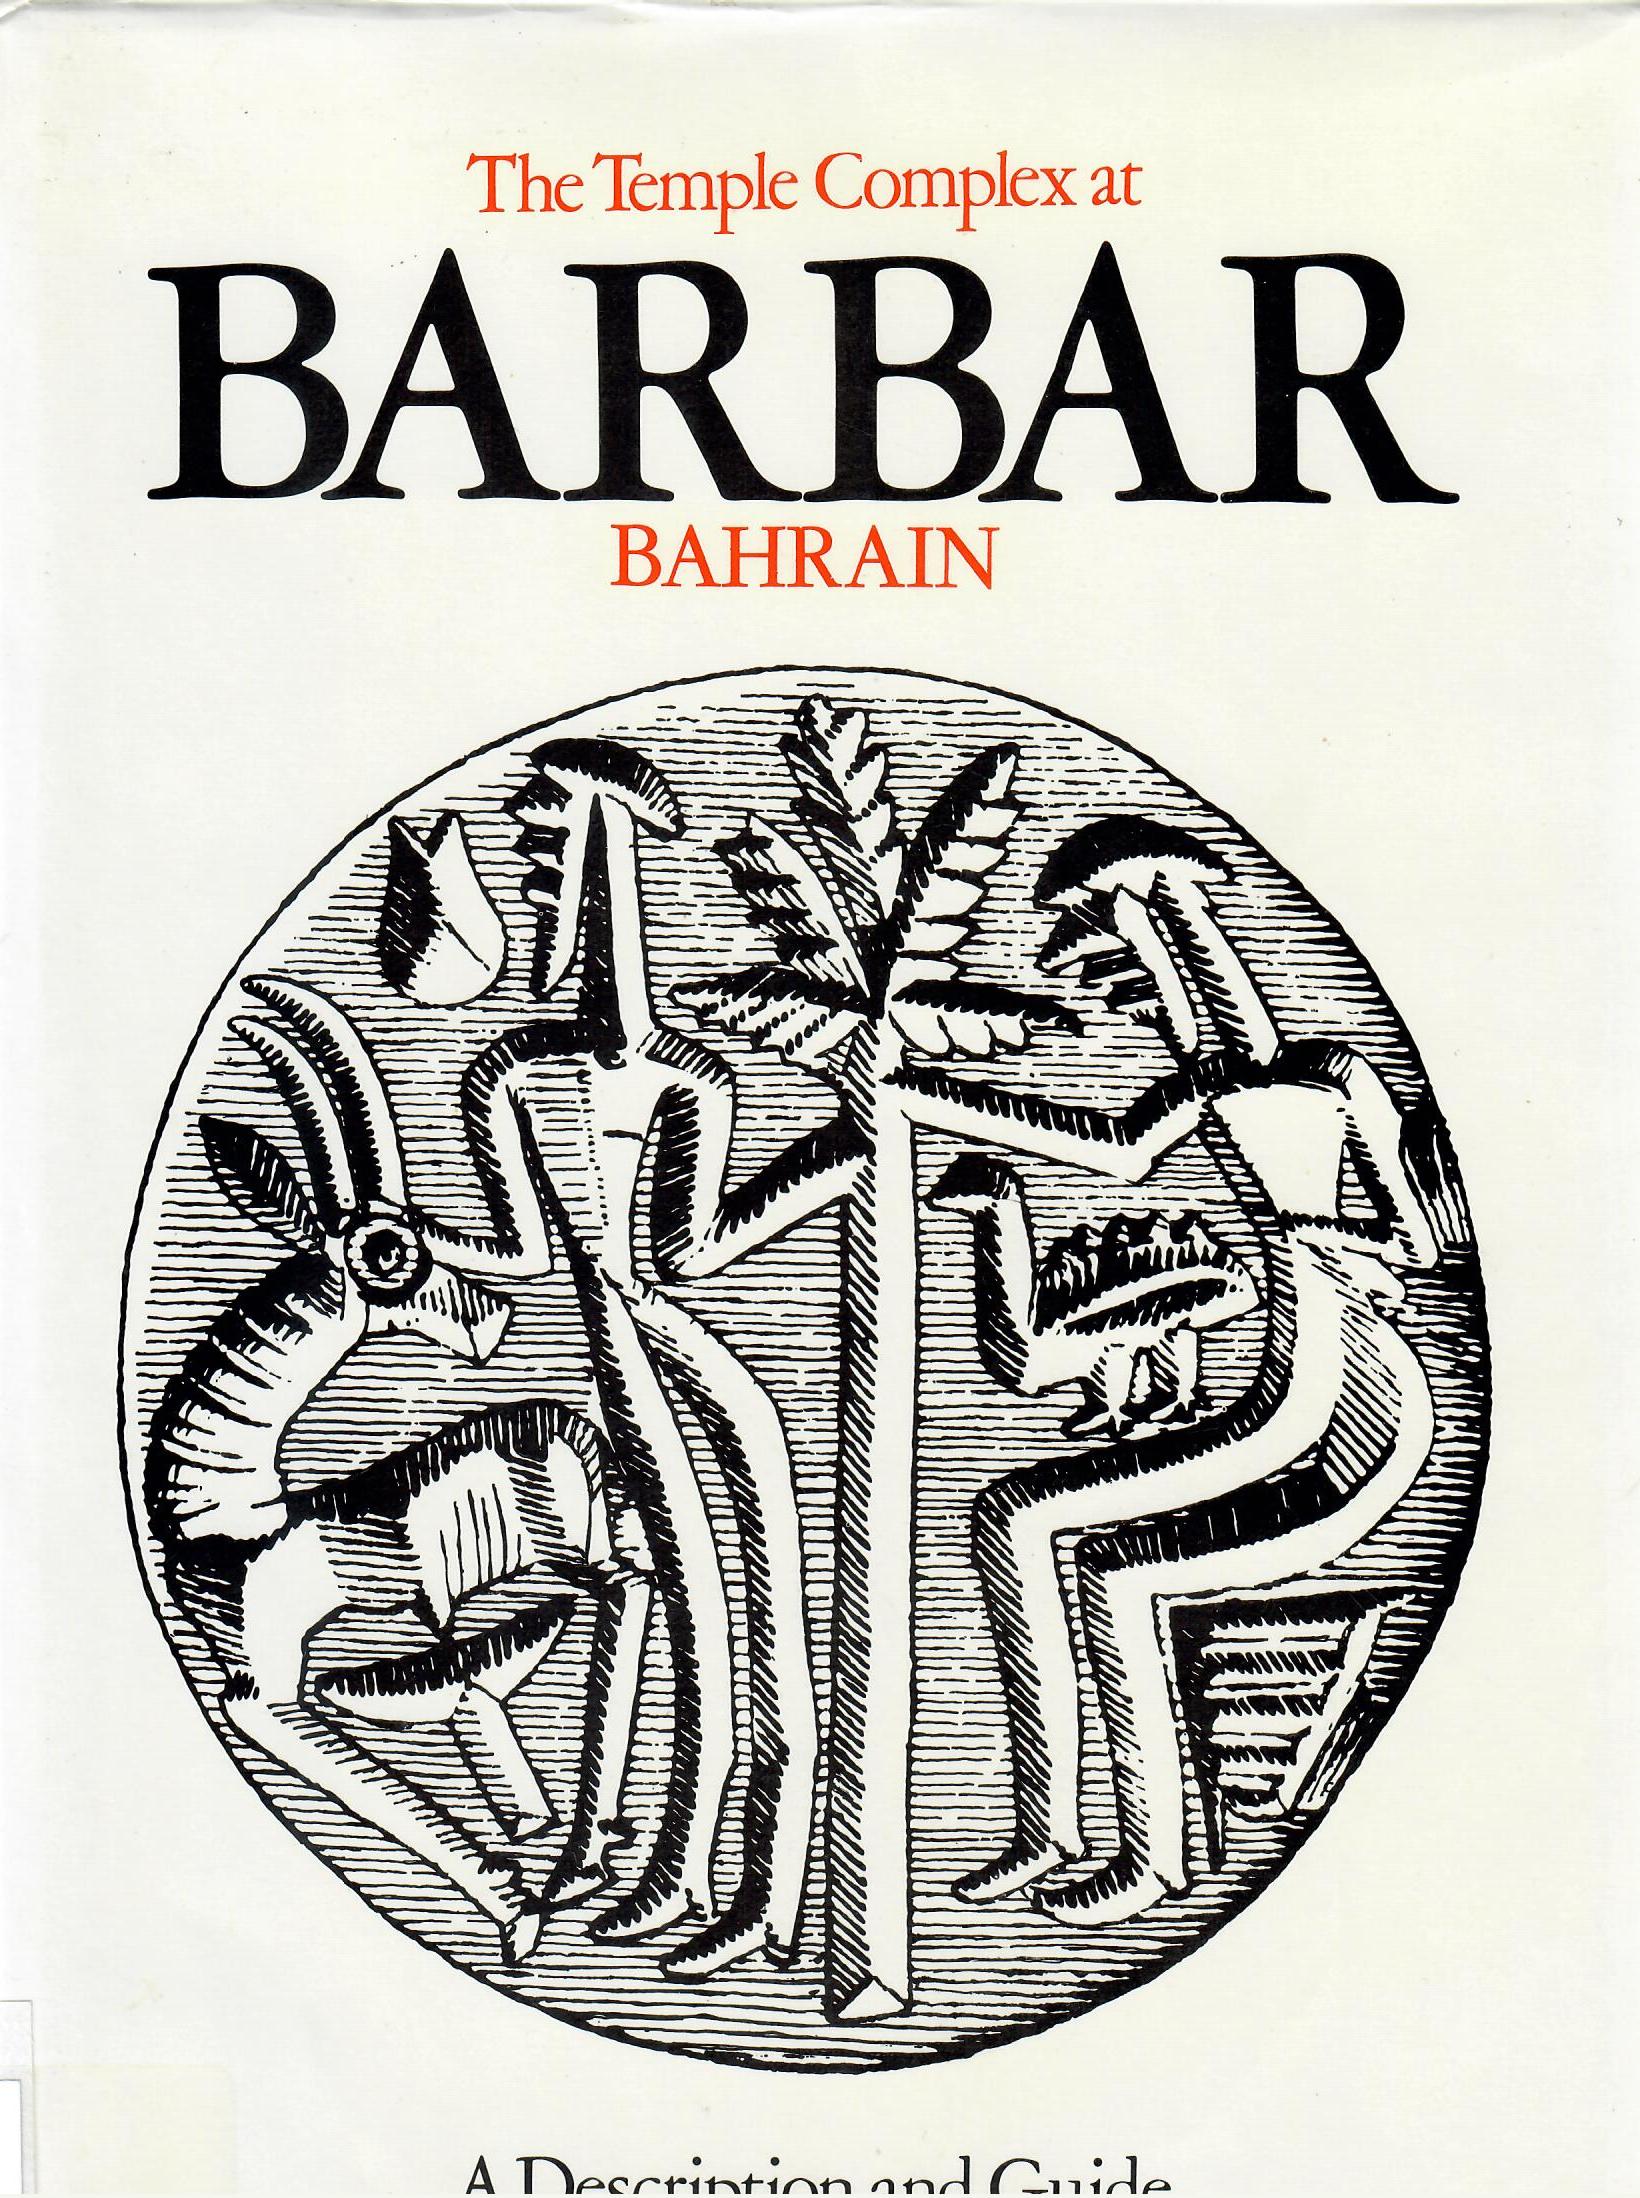 THE TEMPLE COMPLEX AT BARBAR BAHRAIN